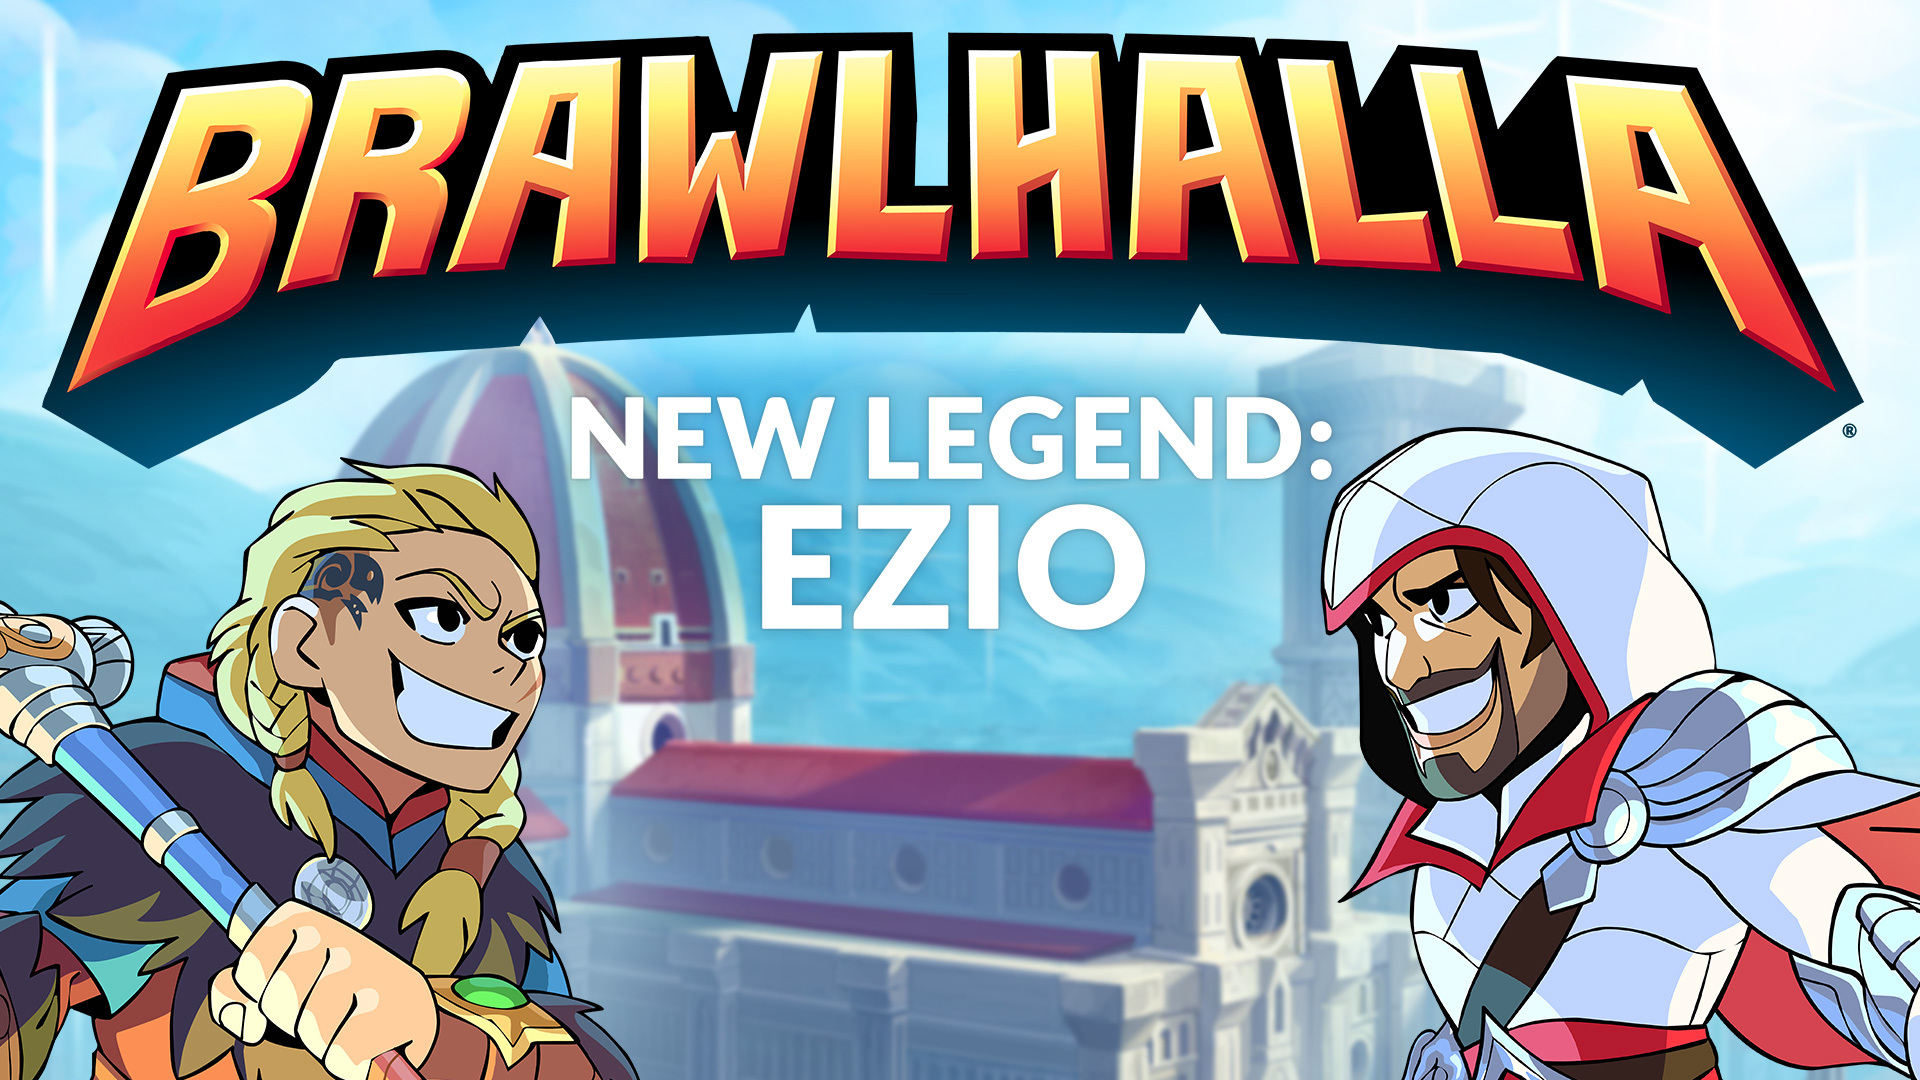 Steam :: Brawlhalla :: Introducing New Legend - Ezio: the Master